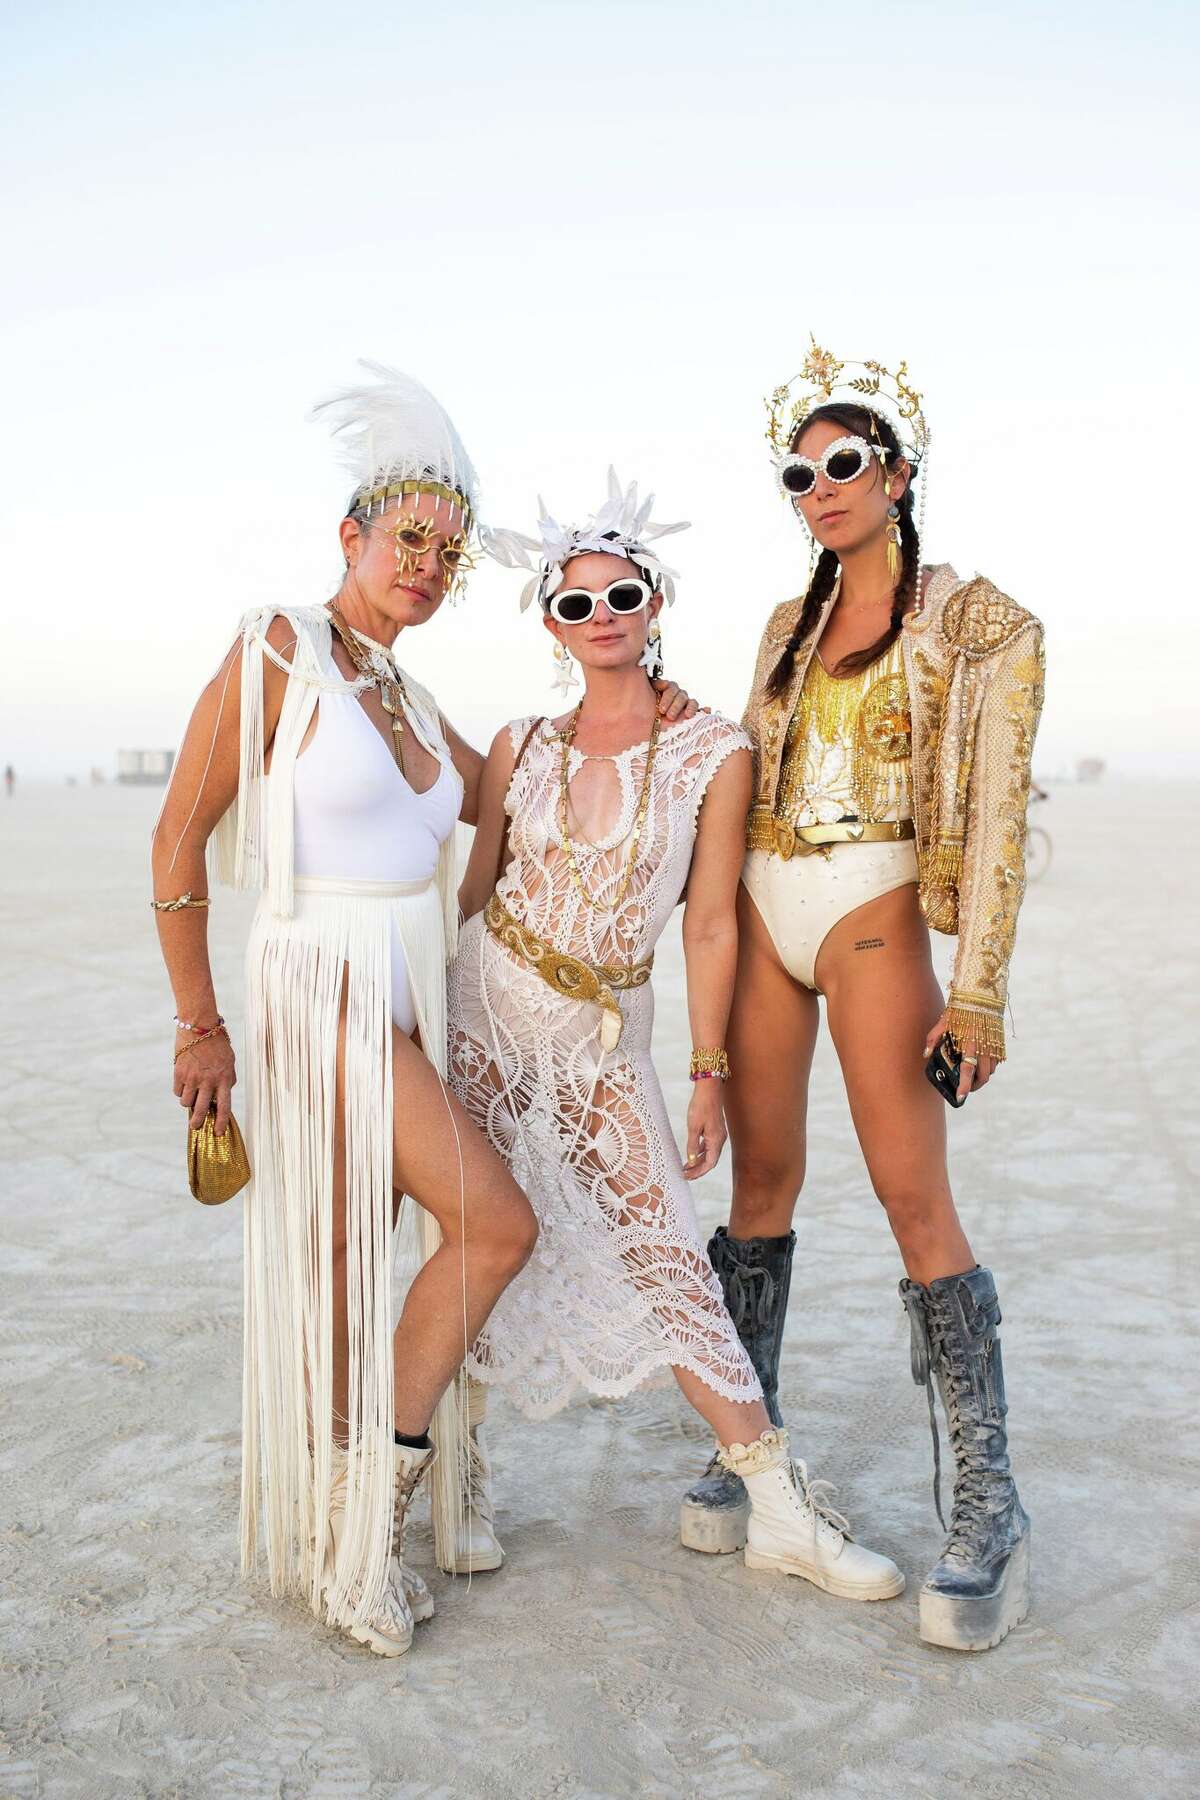 bethielle, @3casascareyes and ravenkauffman at Burning Man 2022 in the Black Rock Desert in Gerlach, Nevada.